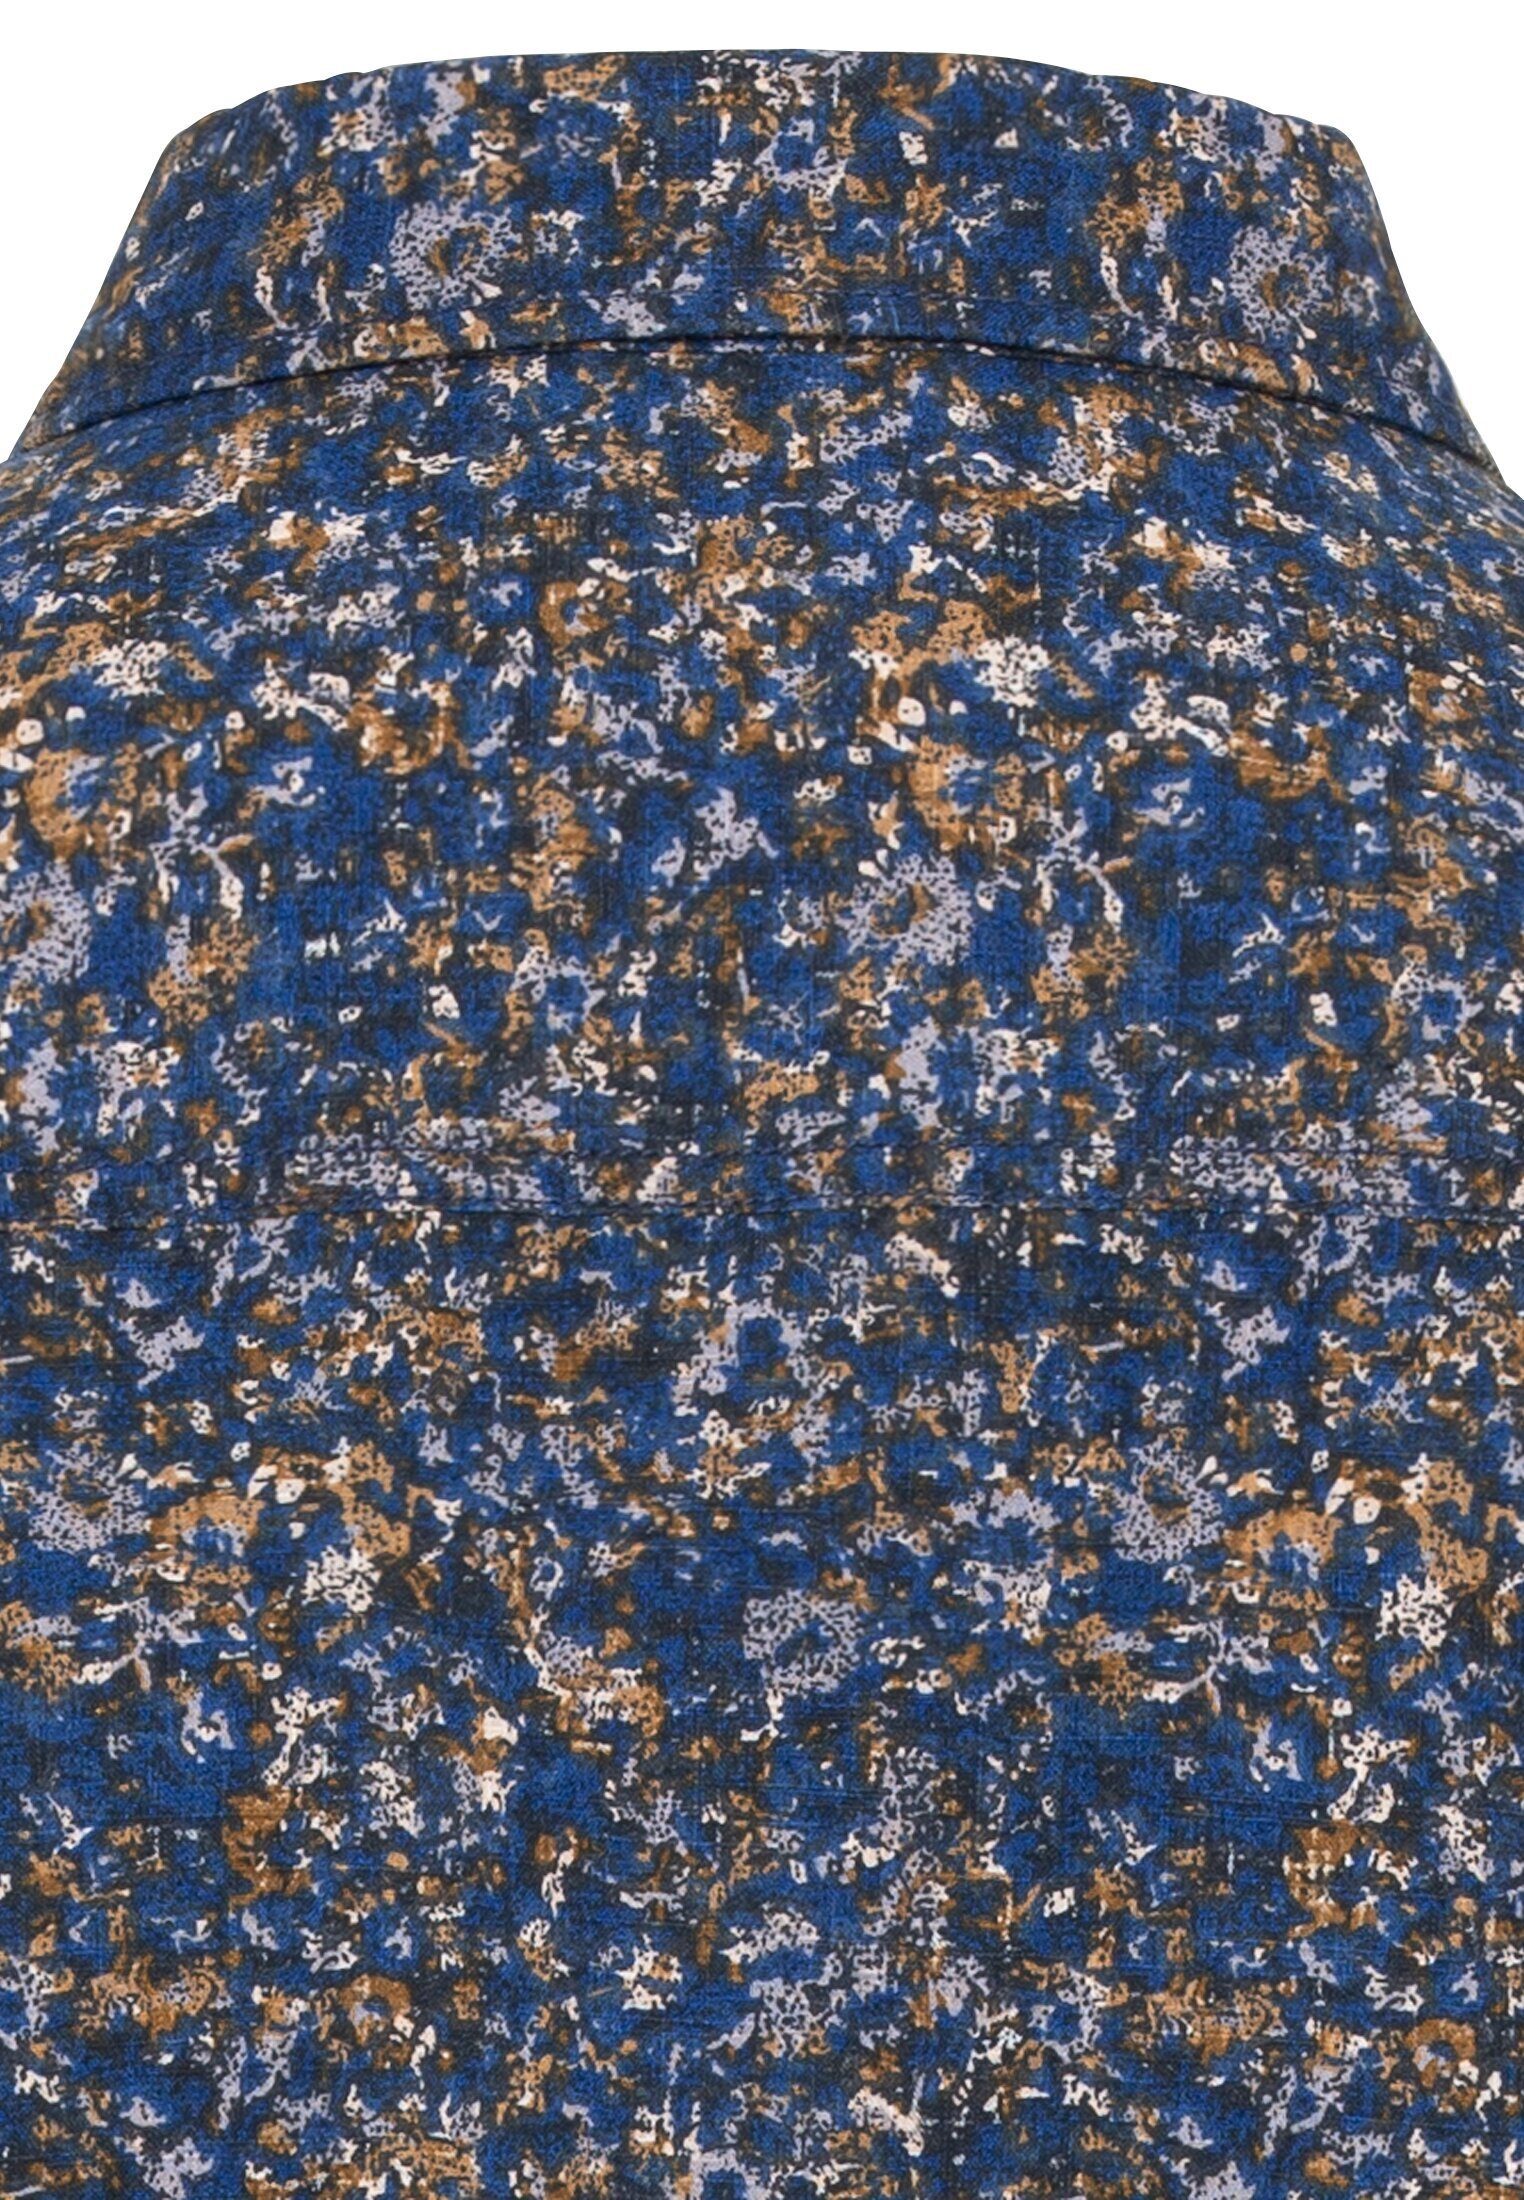 camel Button-Down active Allover-Print Langarmhemd mit Blau